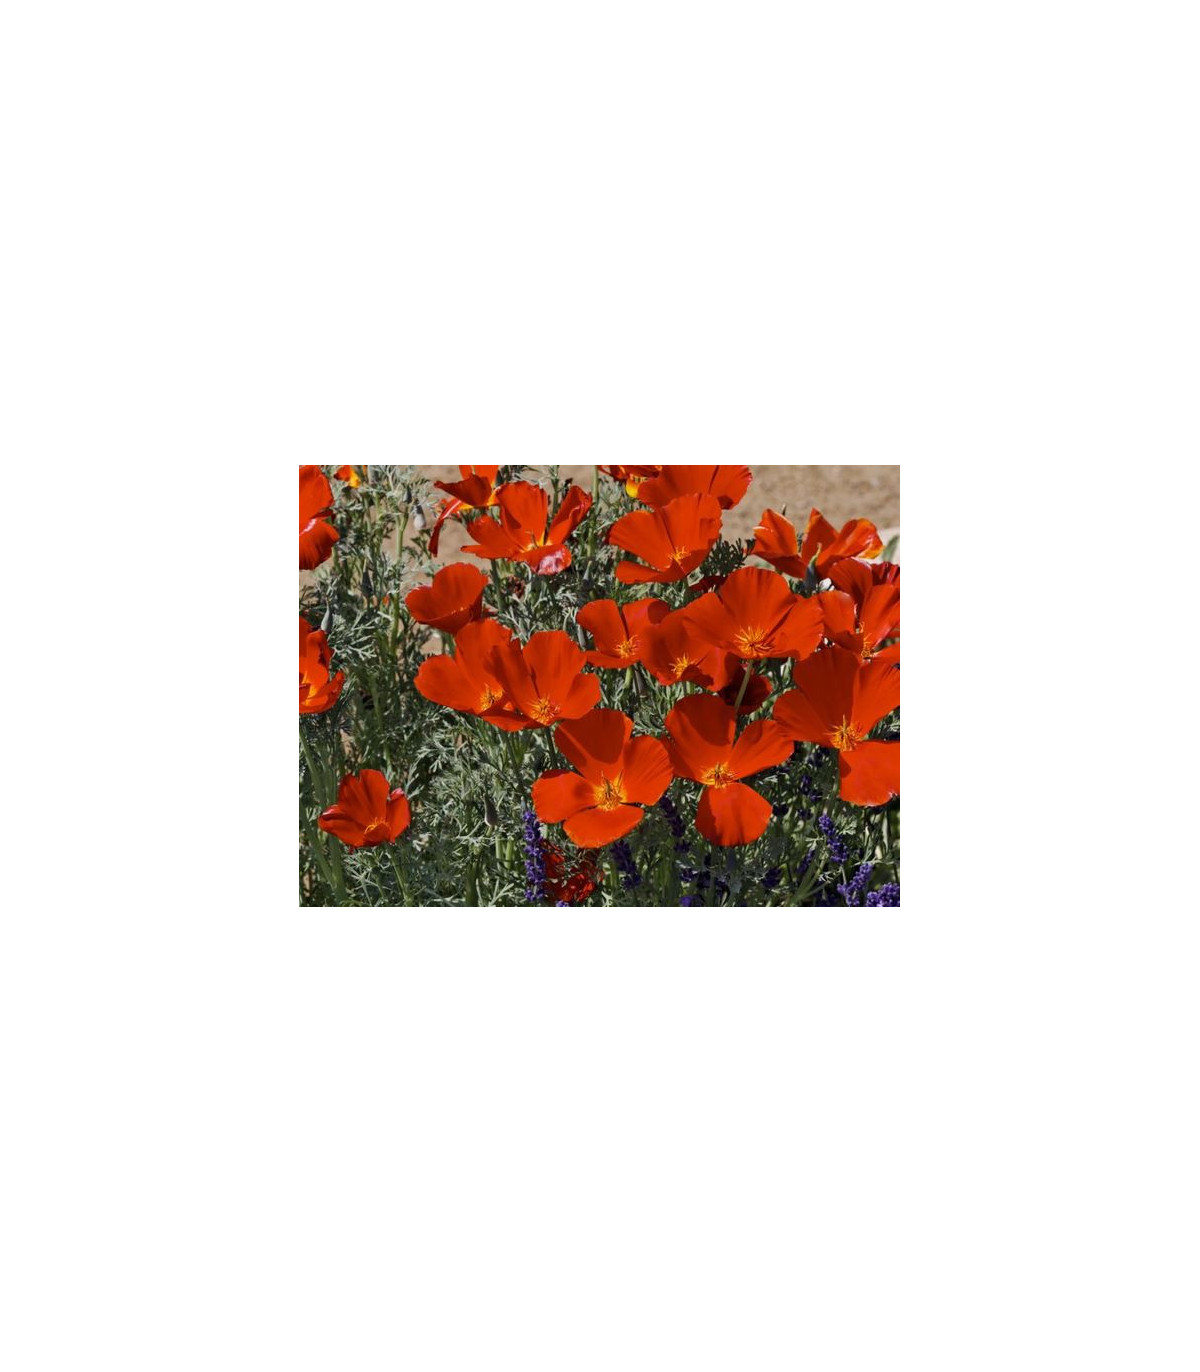 Sluncovka kalifornská červená- Eschscholzia californica - osivo sluncovky - 450 ks